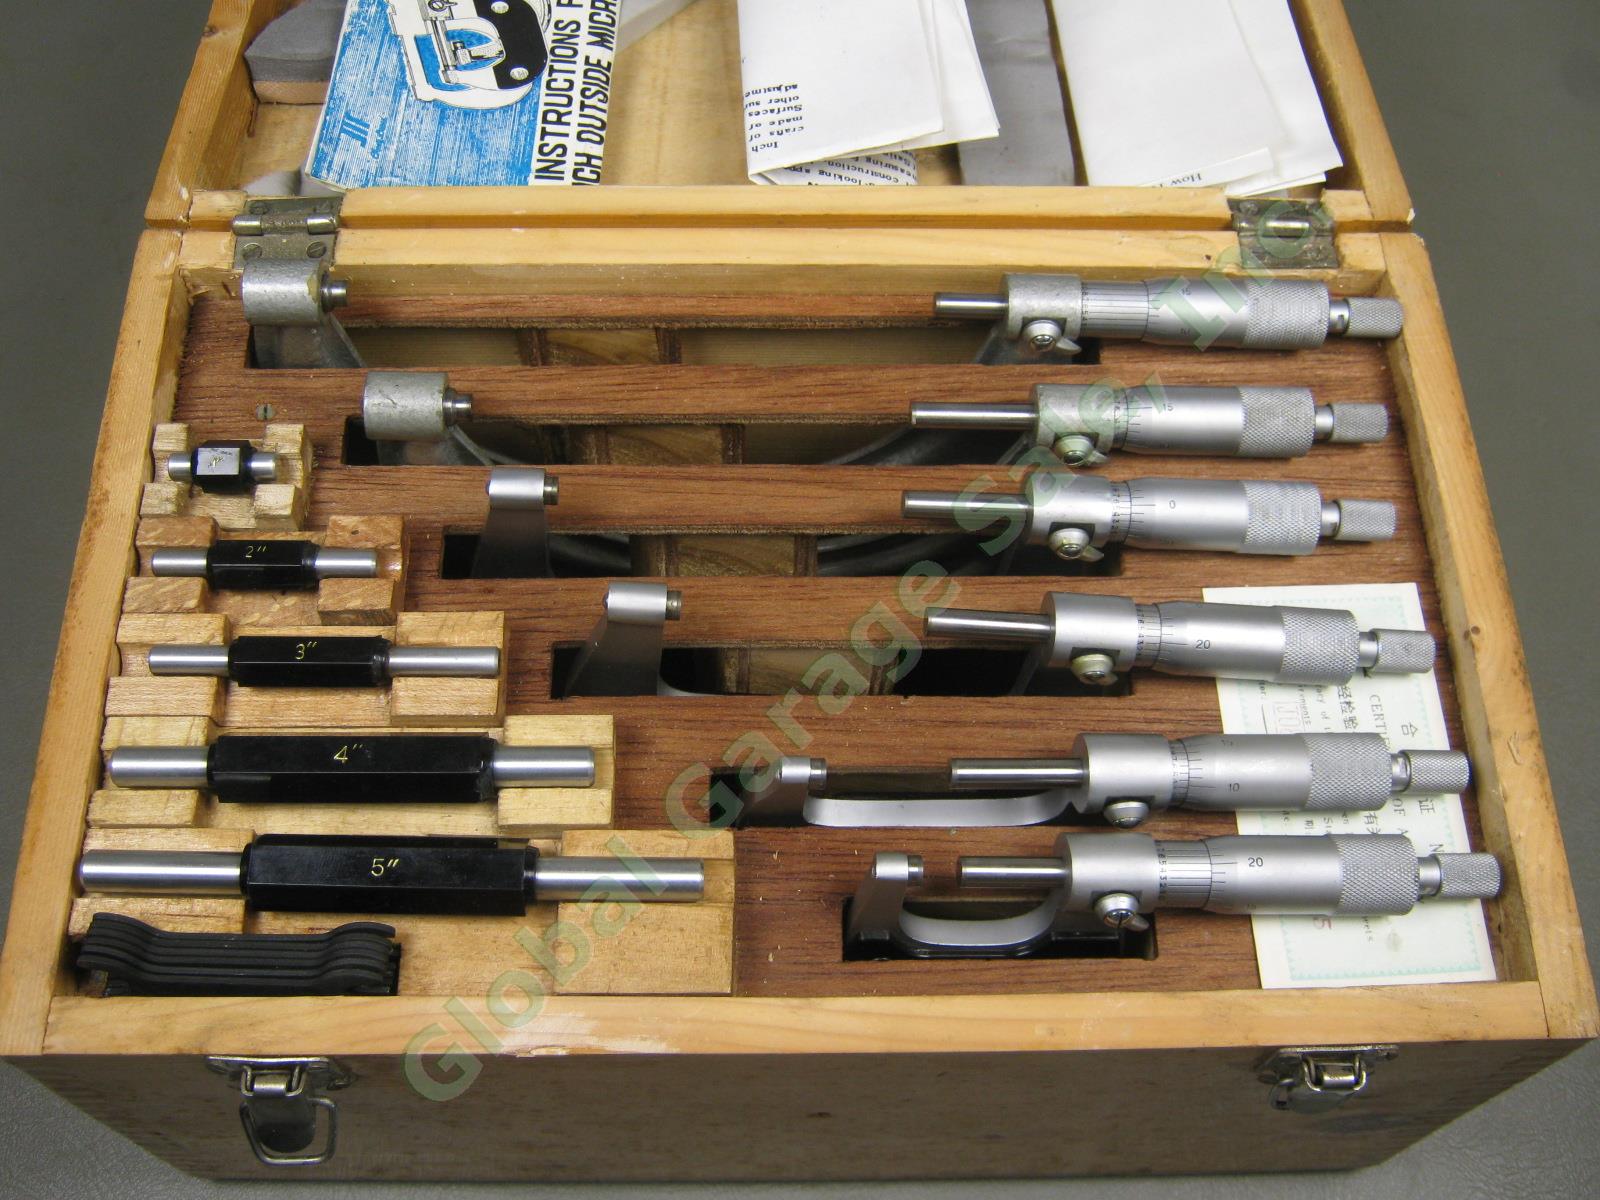 Chuan Brand Outside Micrometer Caliper Set 0-12" in W/ Wood Wooden Storage Case 1